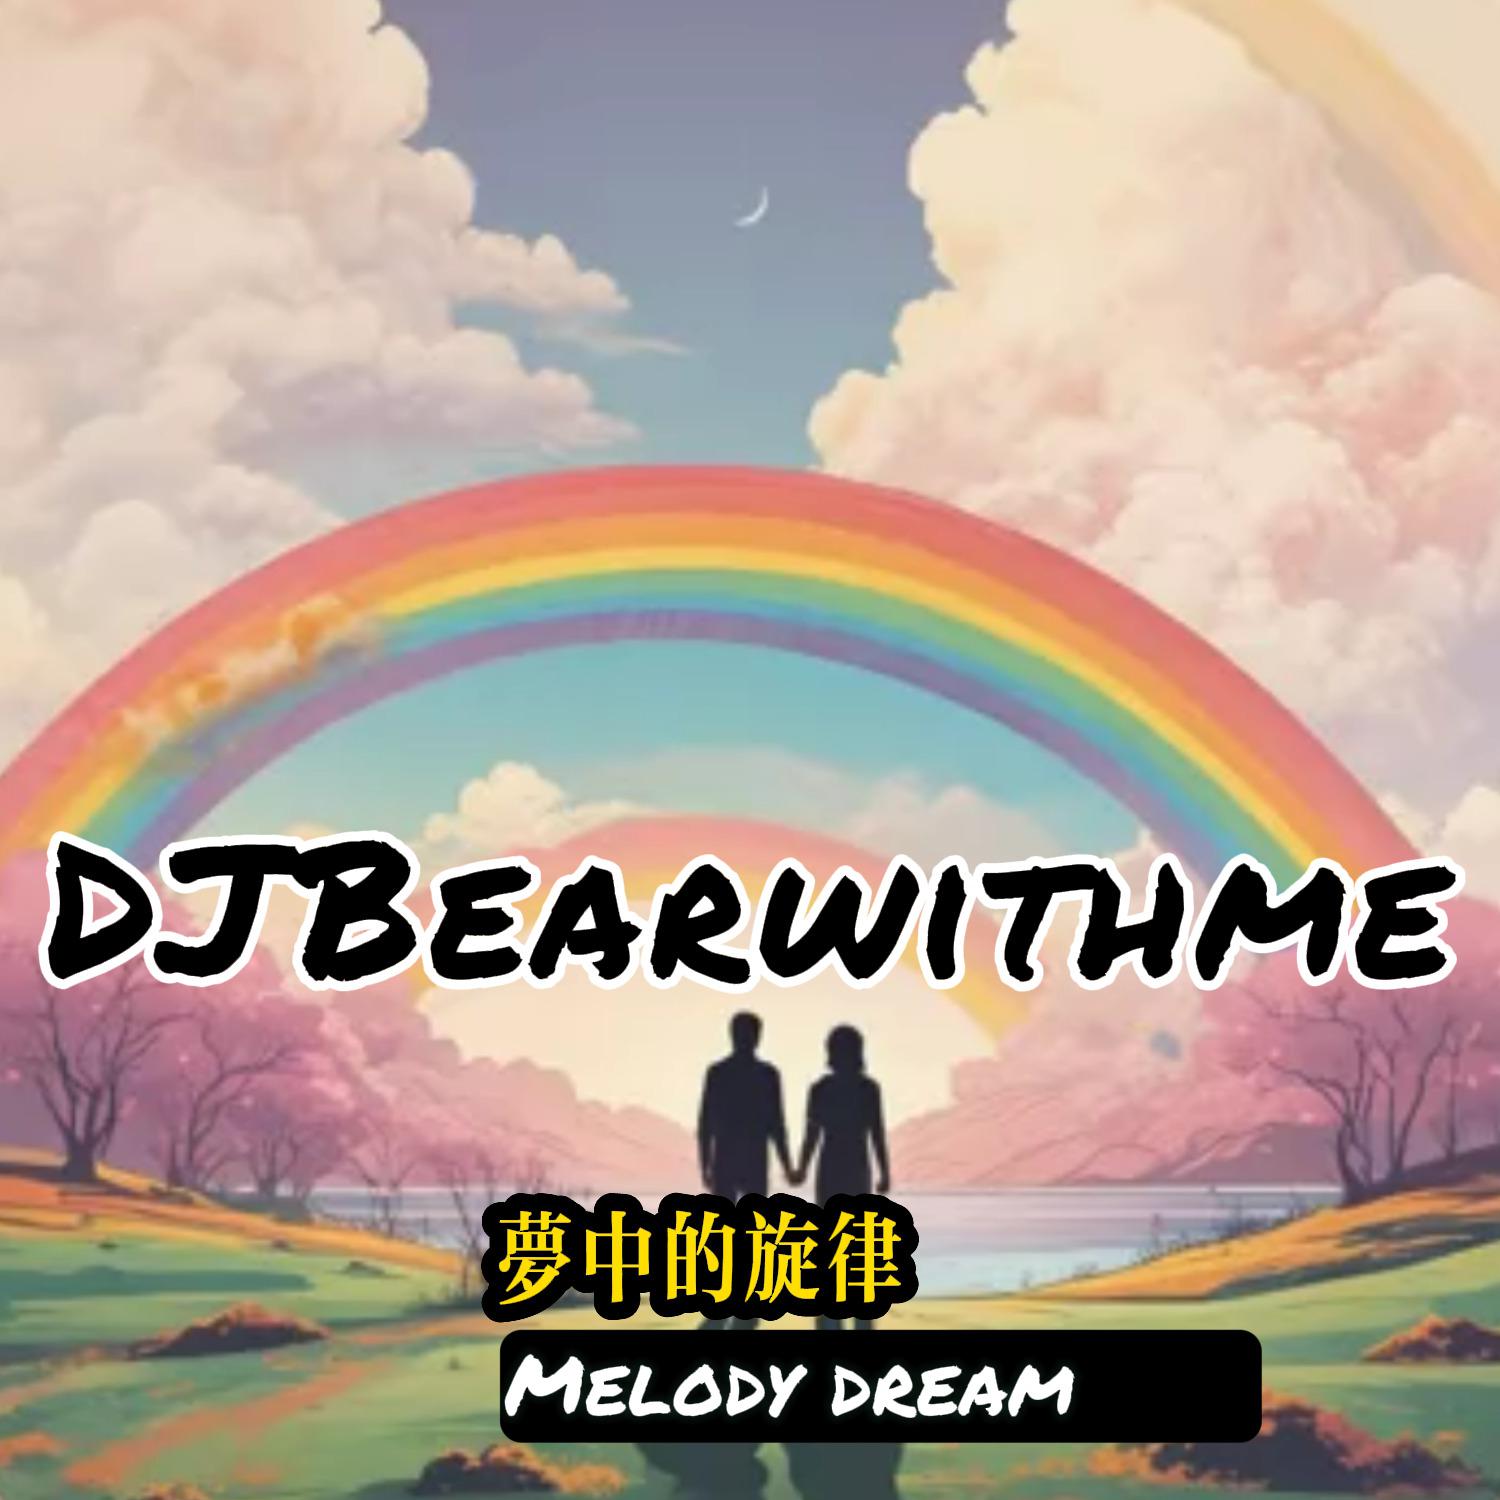 DJBearwithme - 梦中的旋律 Melody dream (Instrumental)